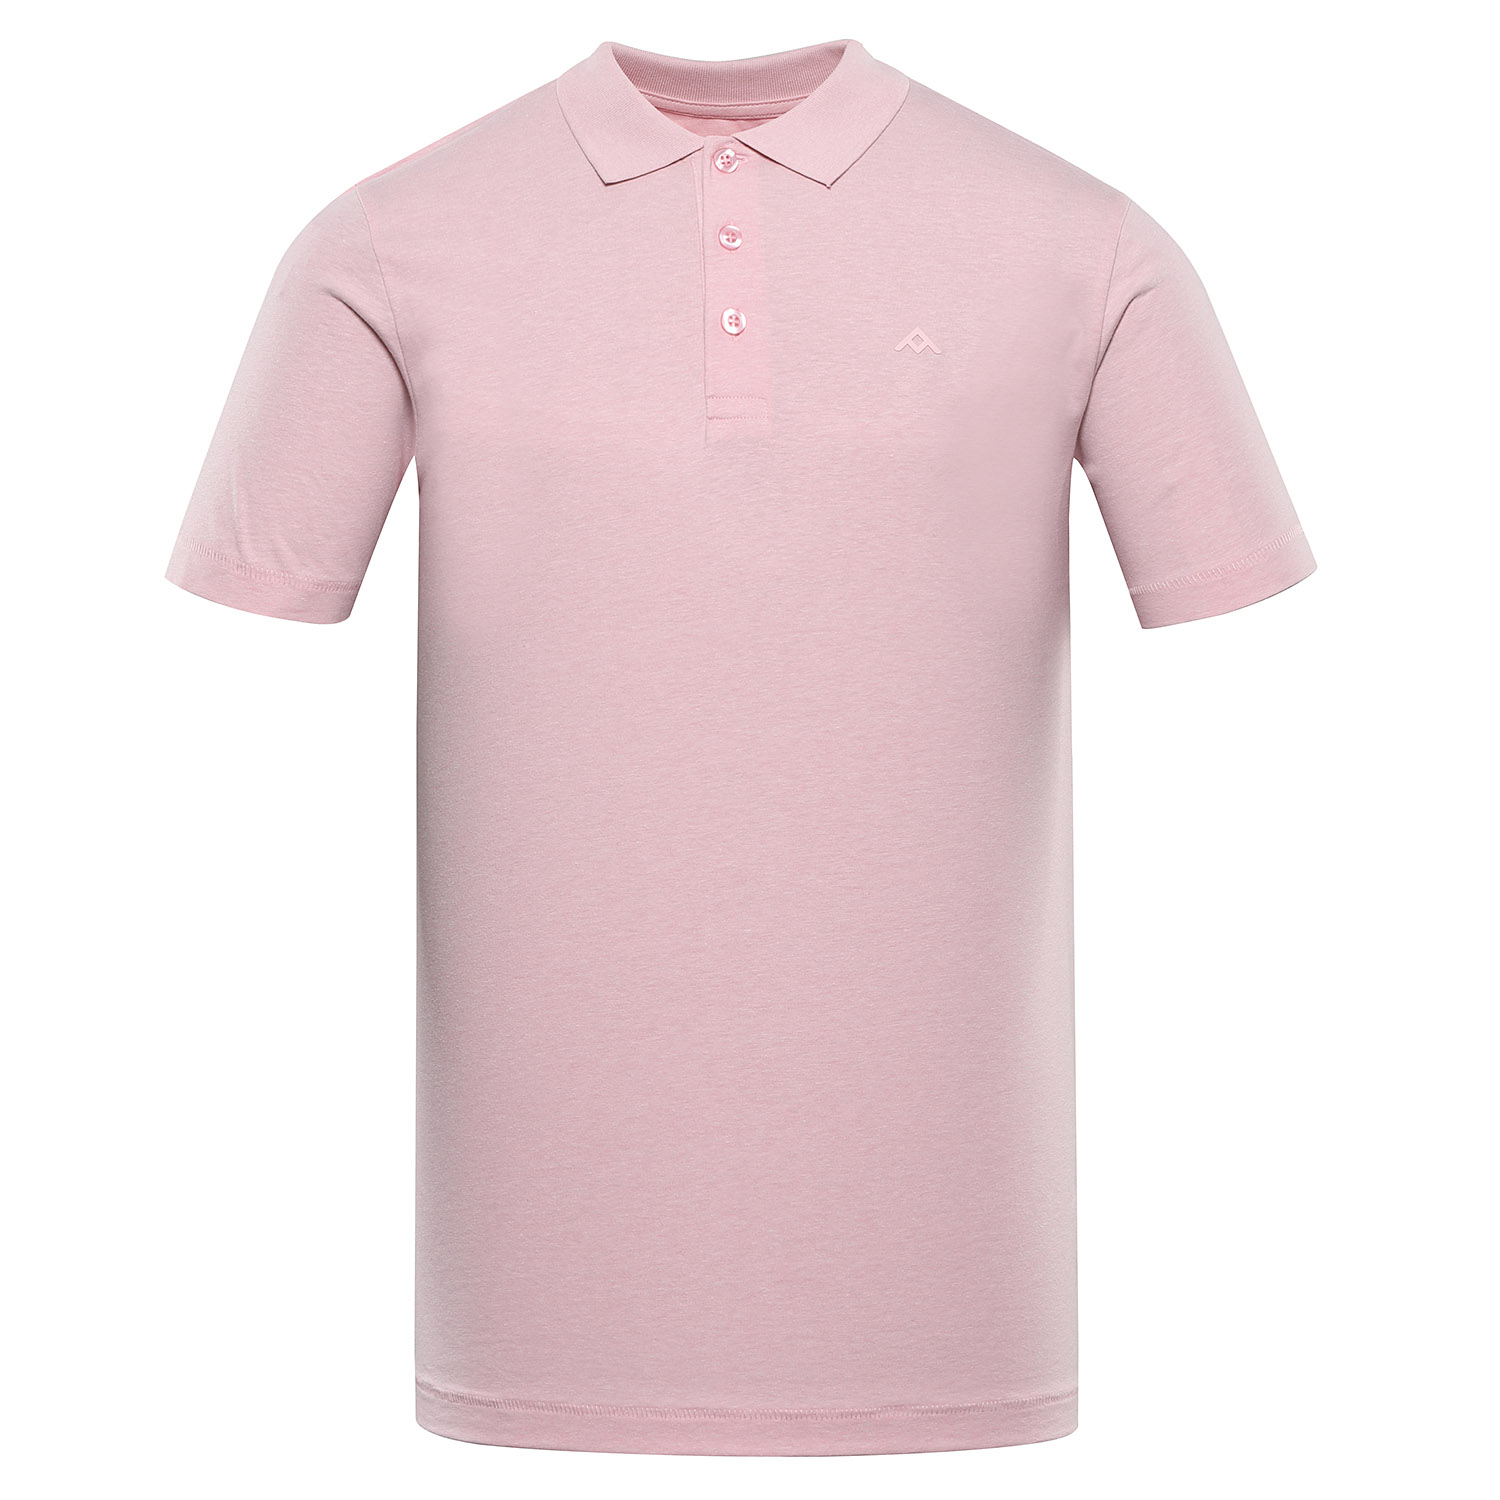 Men's polo shirt nax NAX HOFED pink